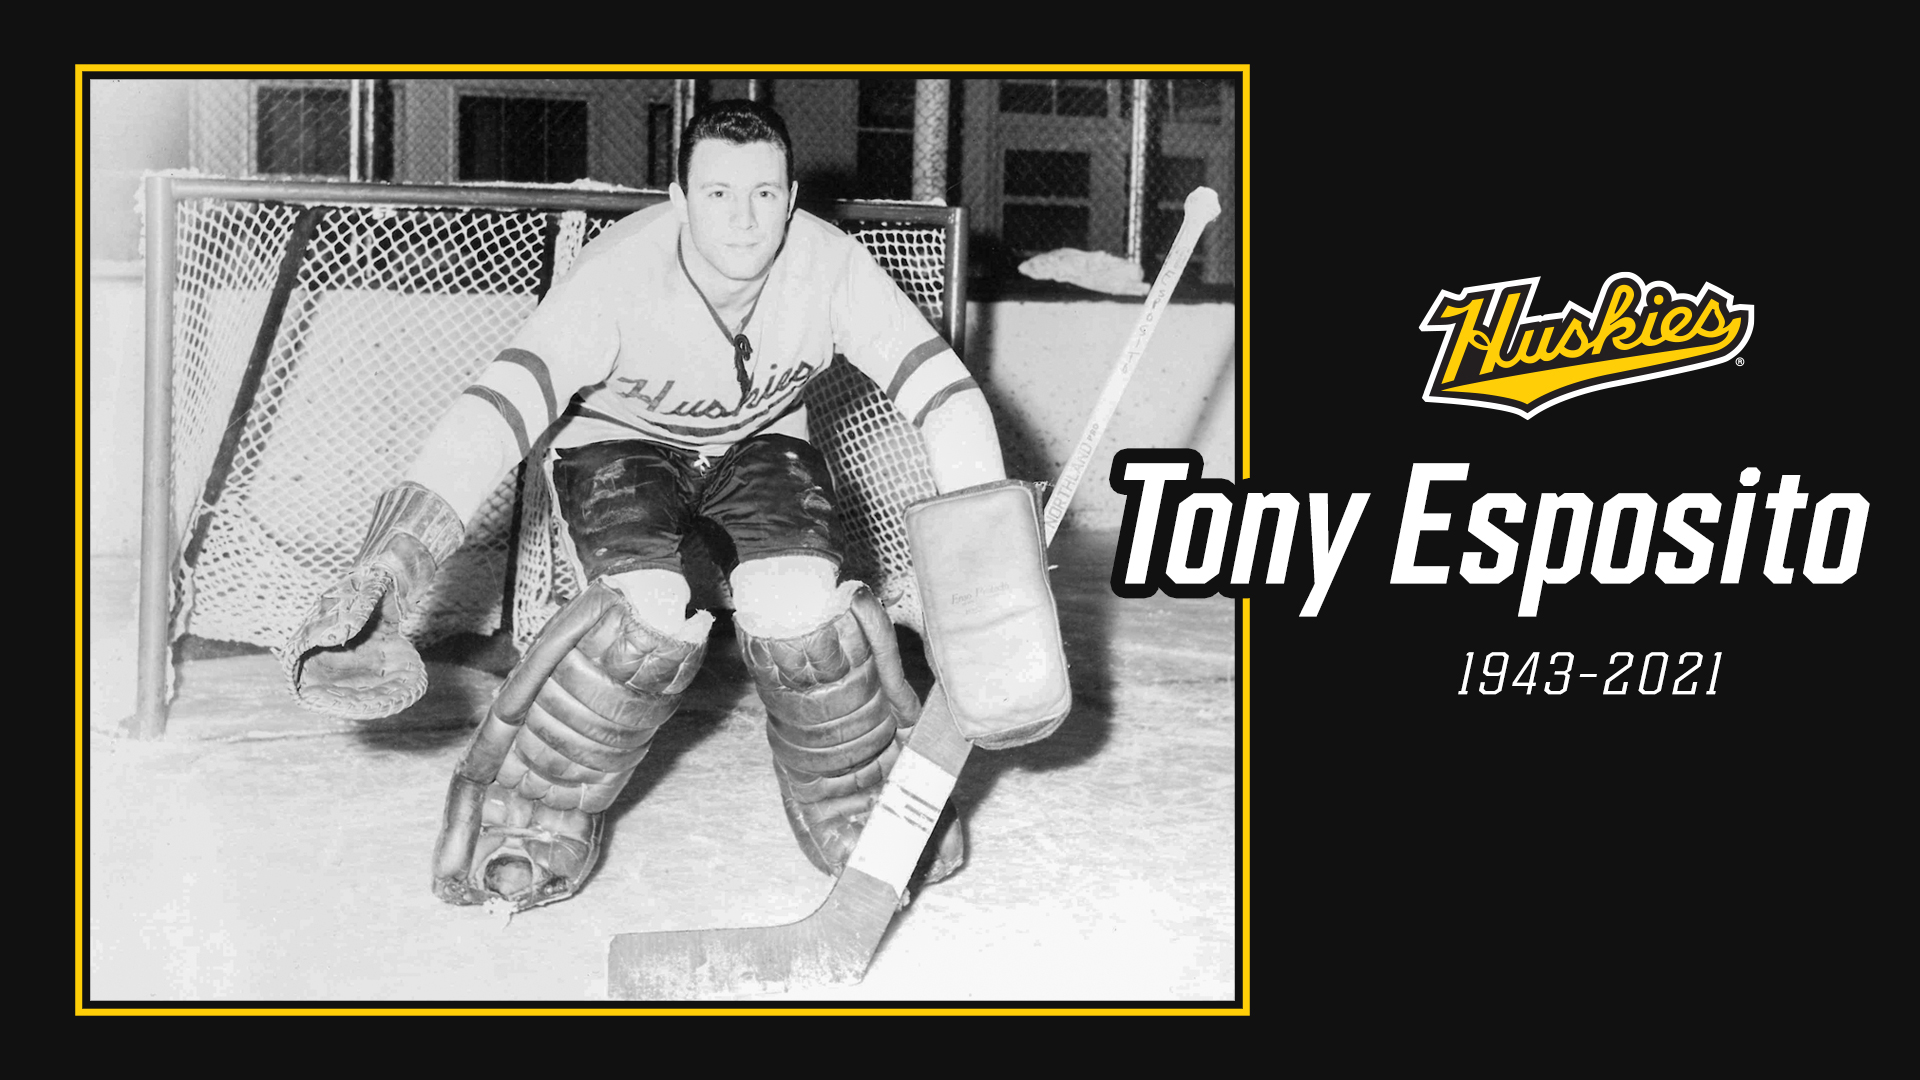 Hall of Fame goaltender Tony Esposito dies at 78